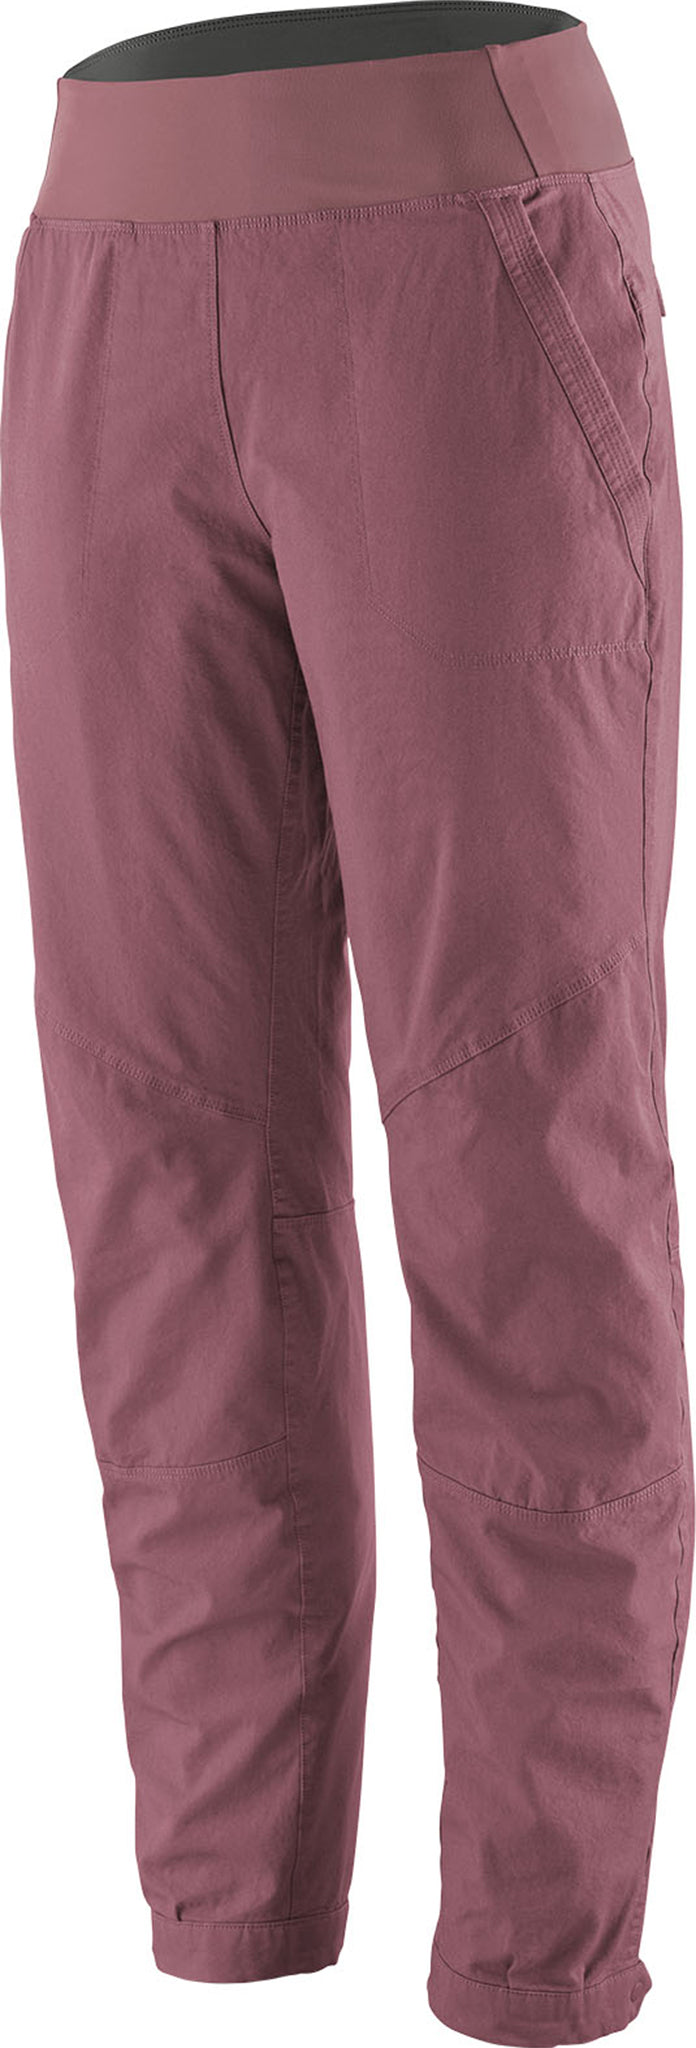 Patagonia HAMPI ROCK PANTS - Trousers - evening mauve/light pink